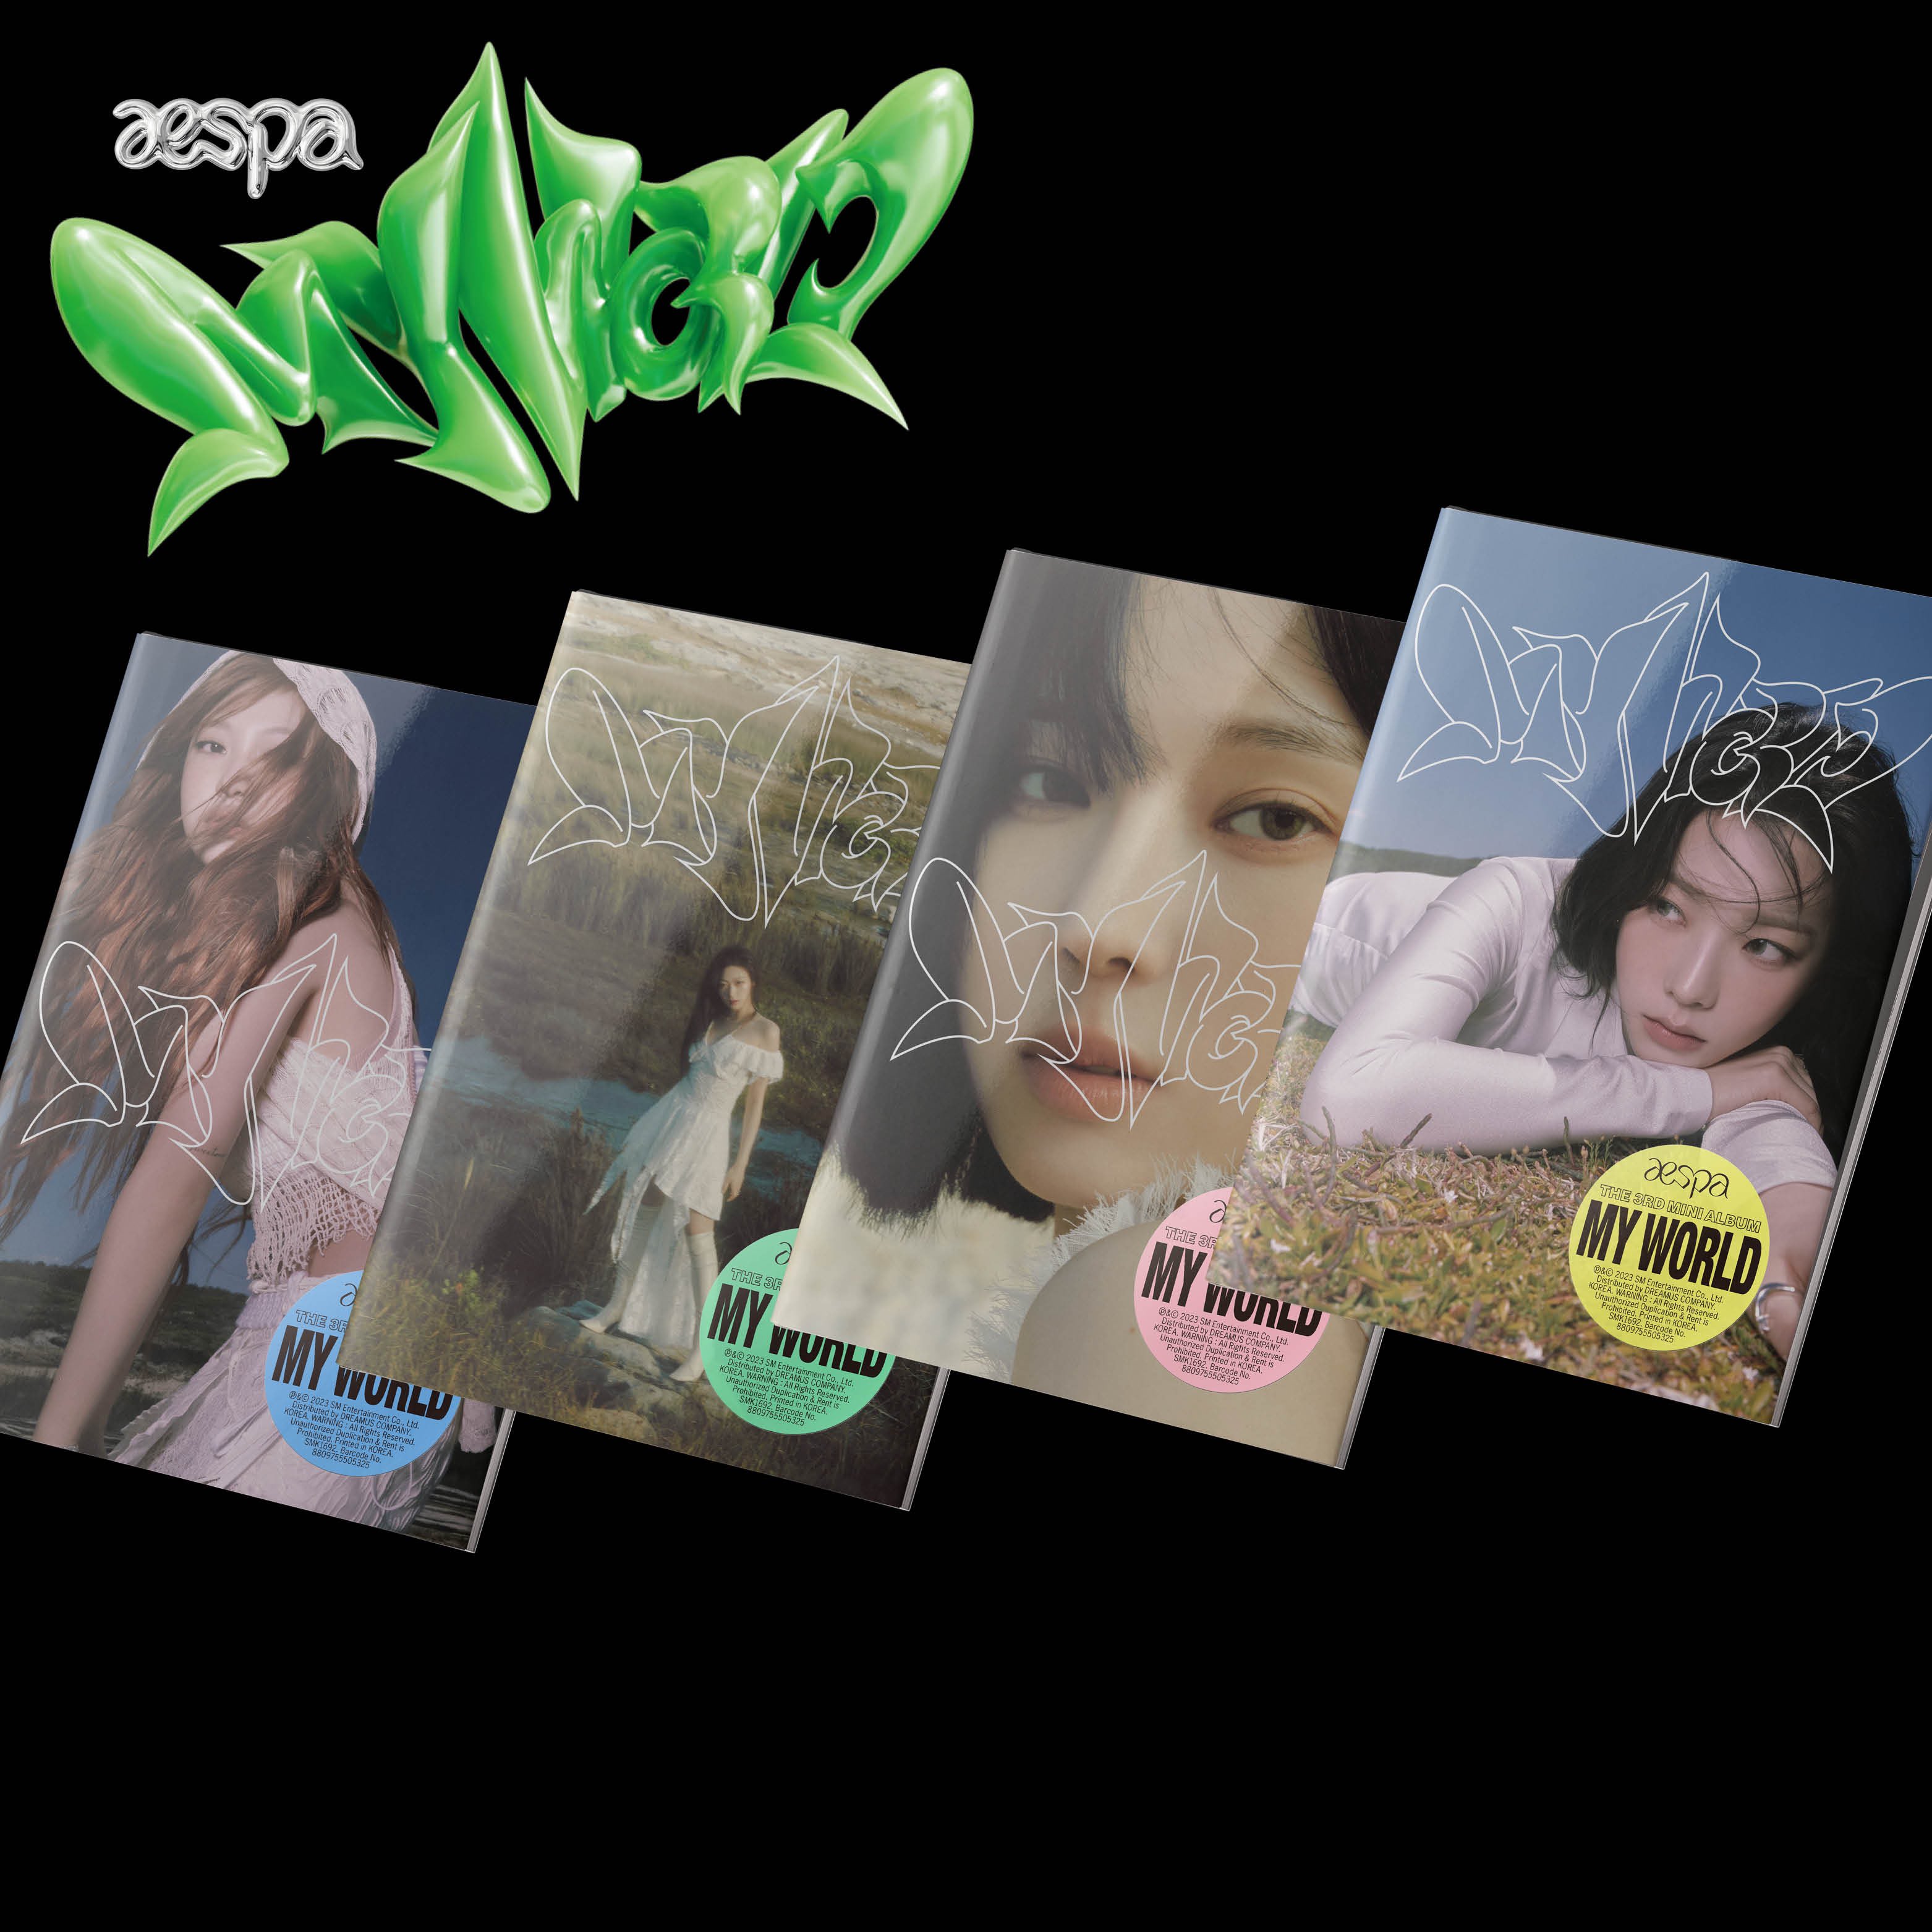 [KPOP] aespa The 3rd Mini Album "My World" Album Details Pantip